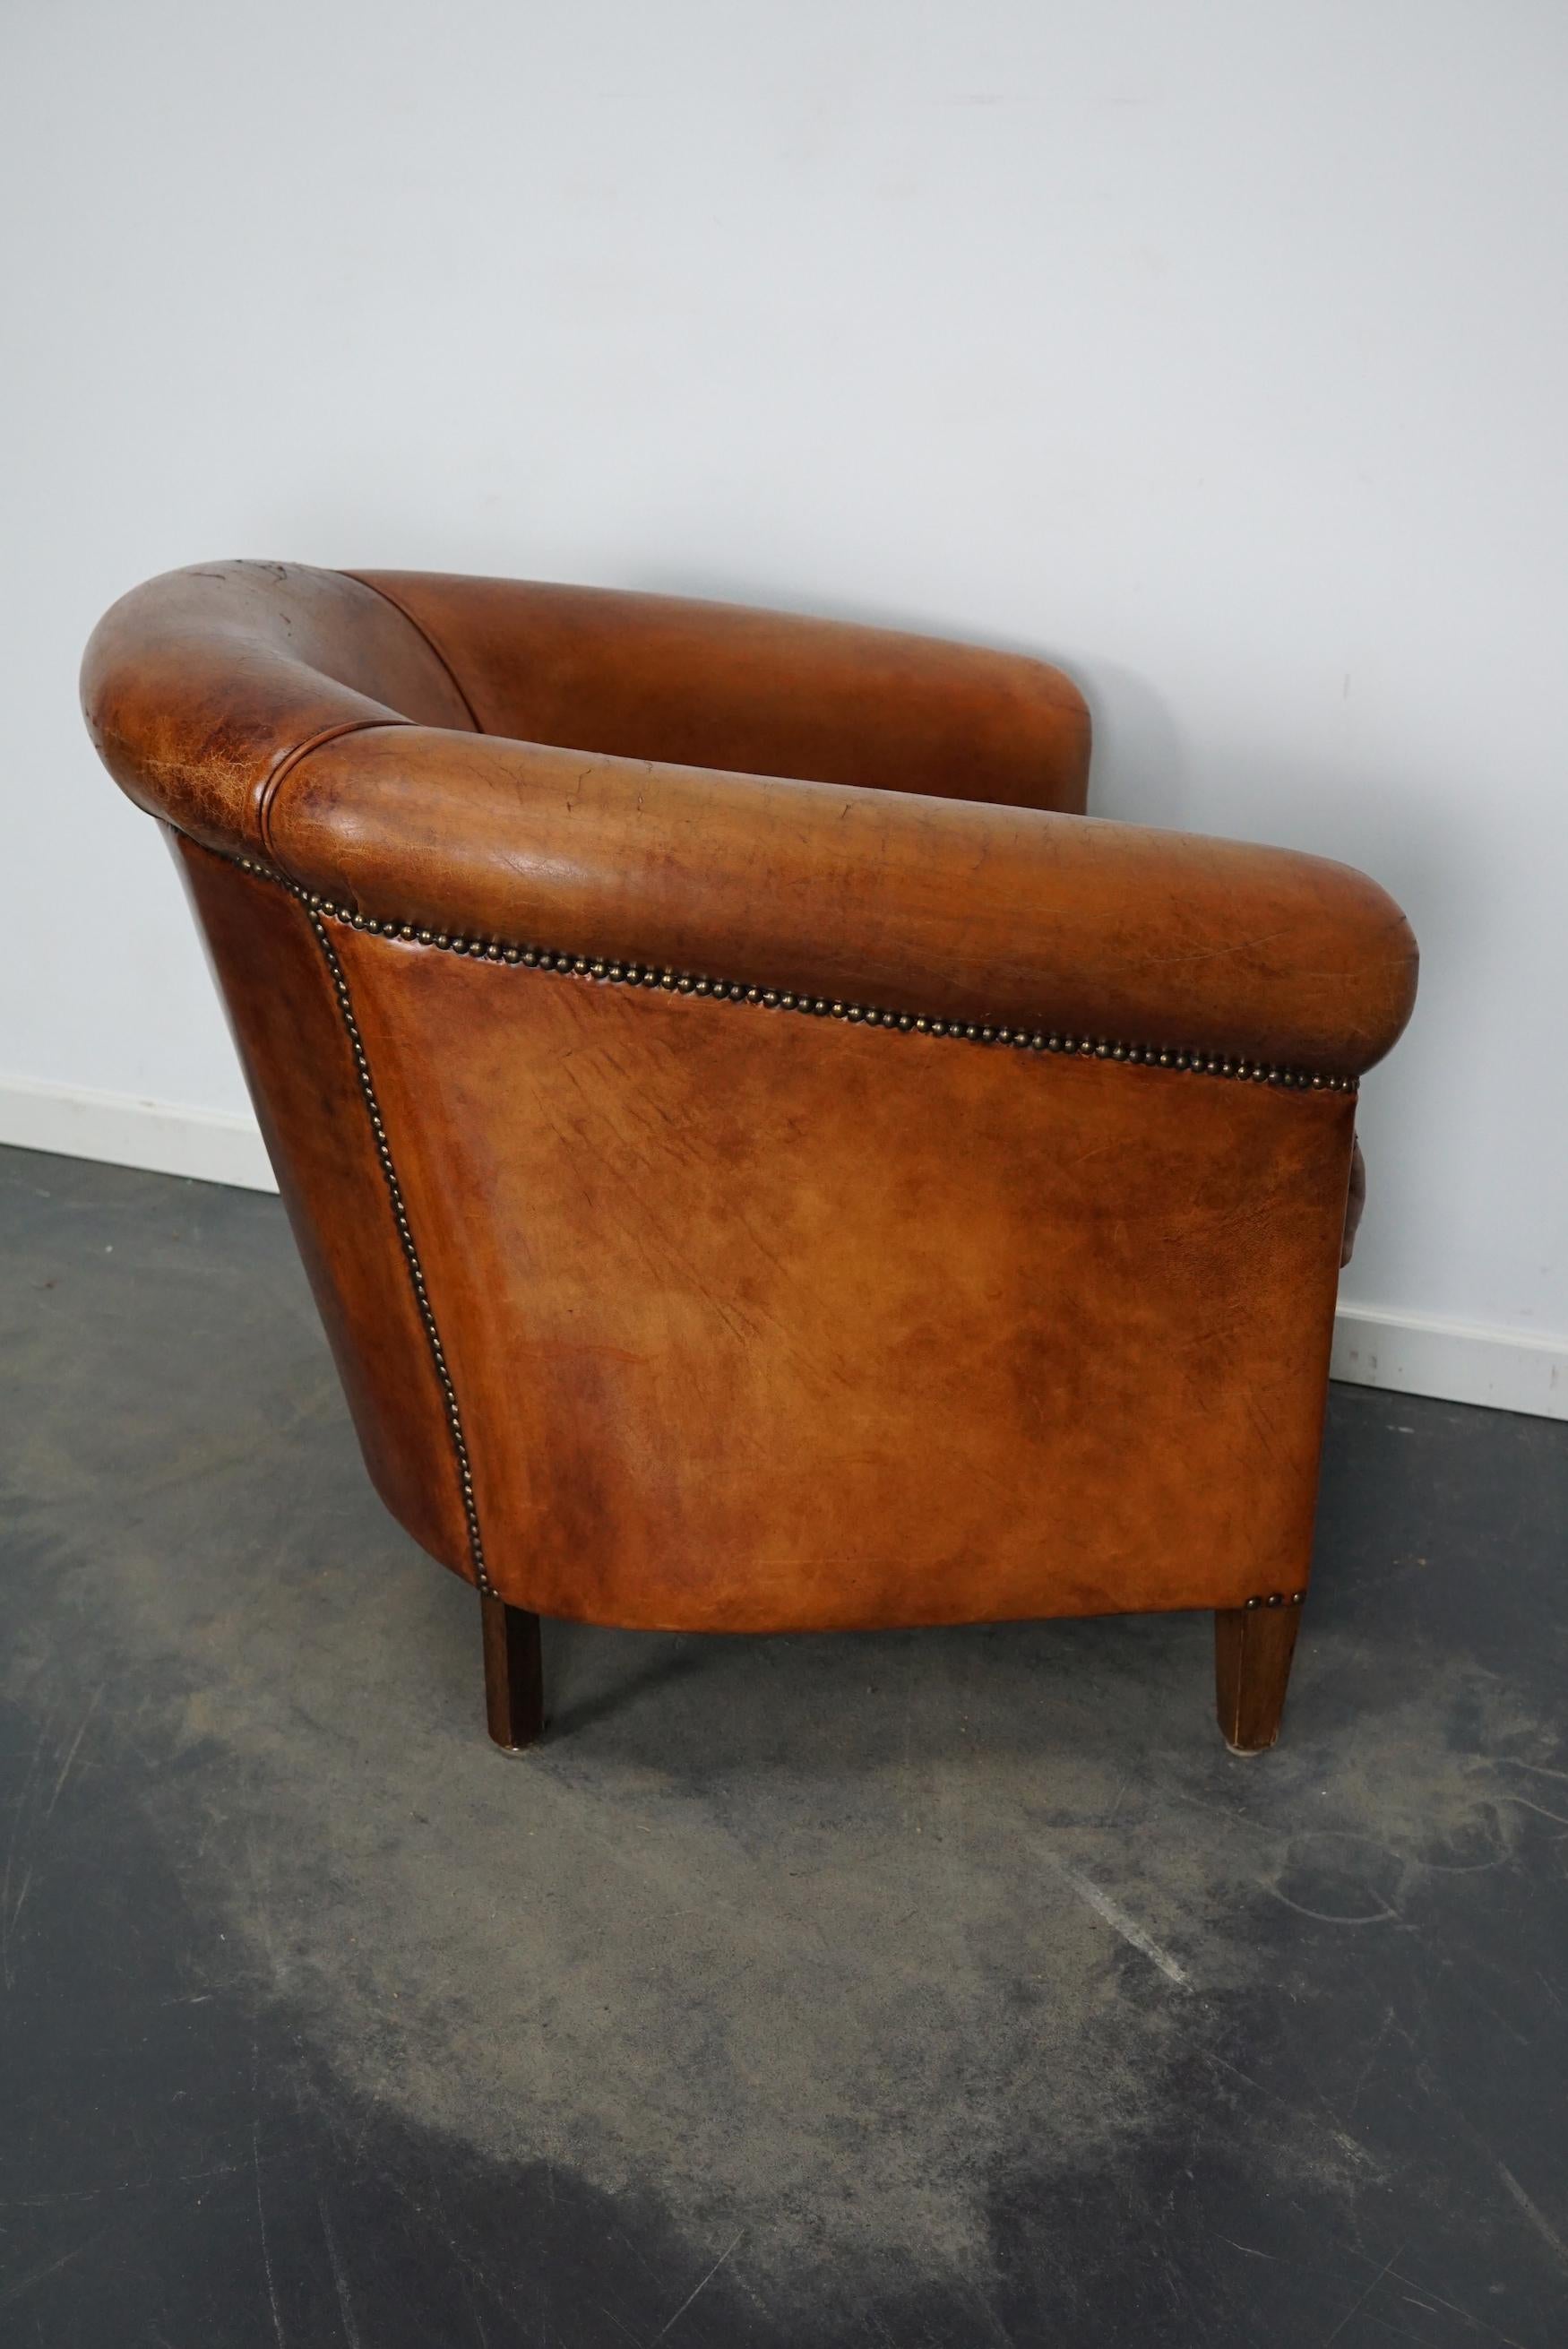 Industrial Vintage Dutch Cognac Colored Leather Club Chair